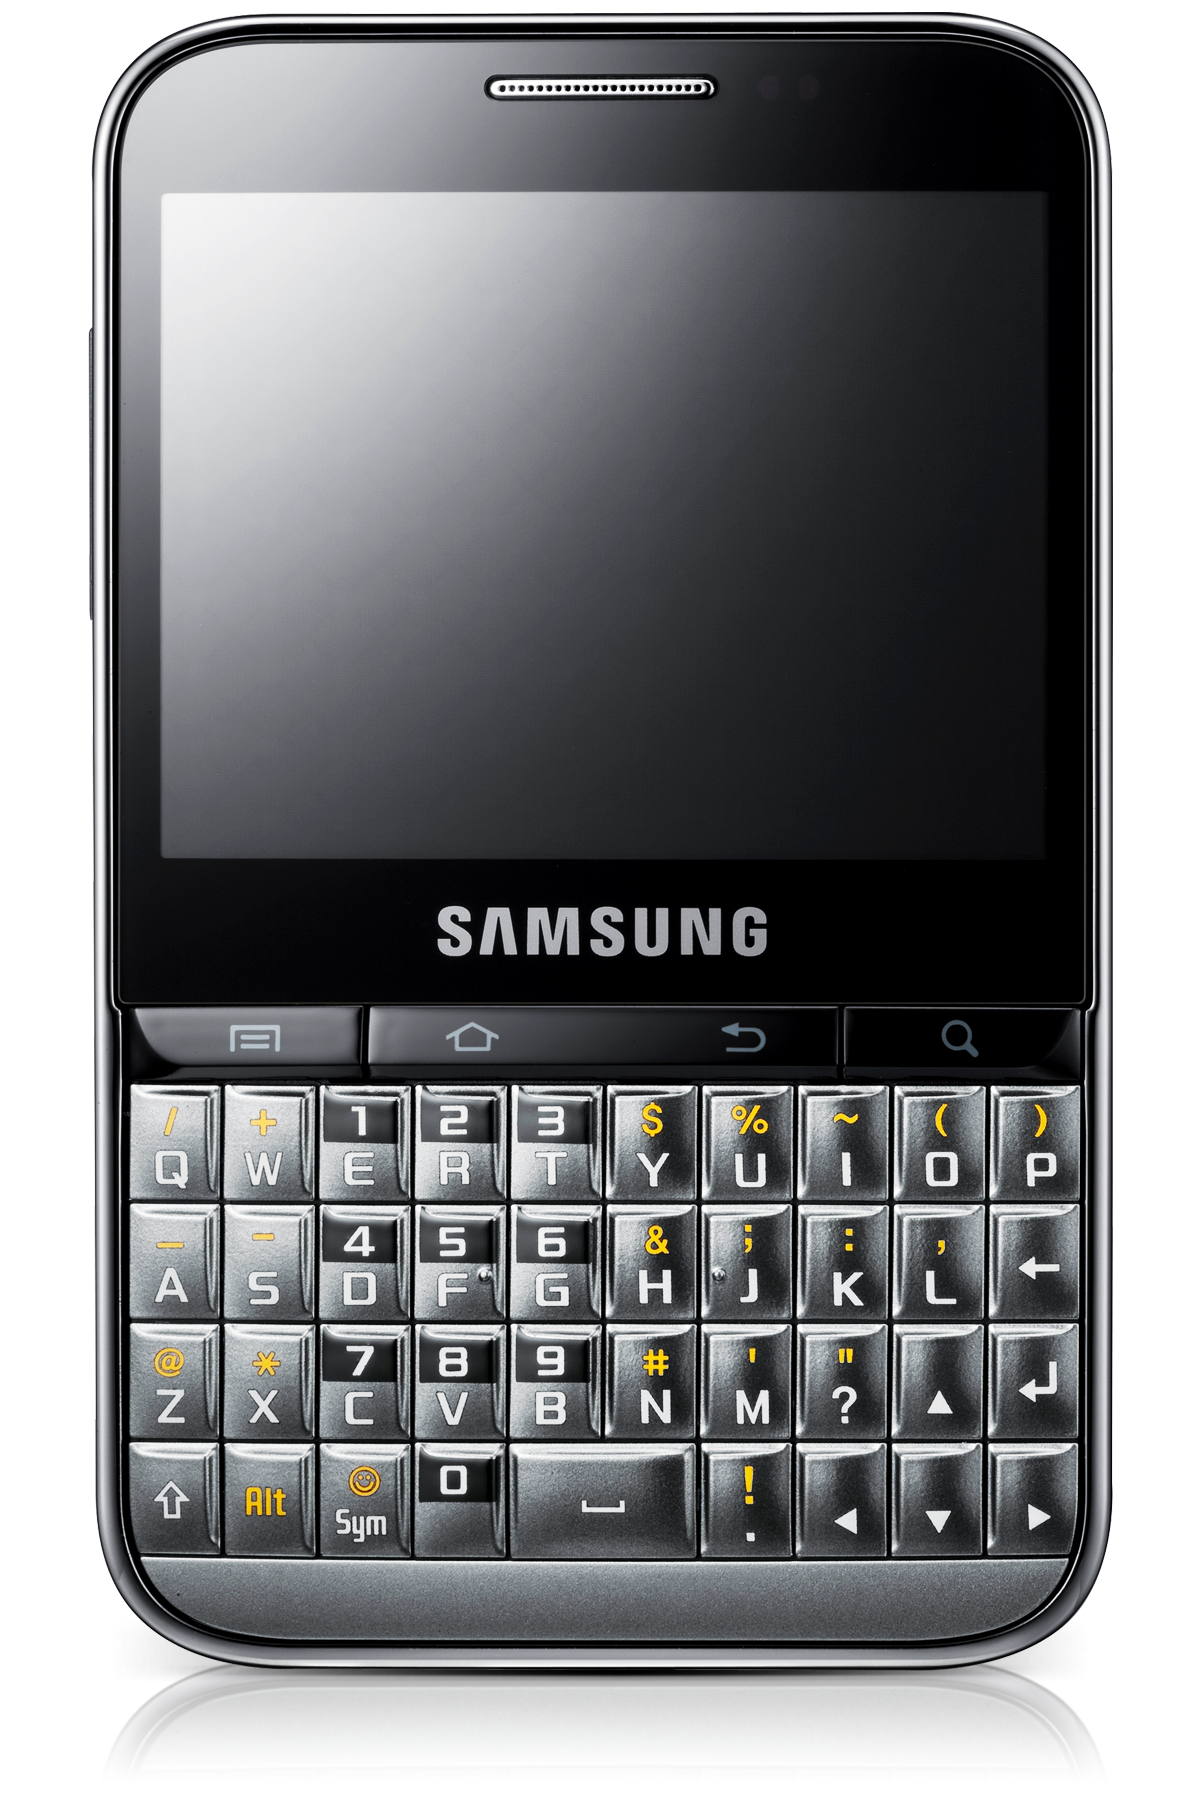 Samsung Galaxy Pro b7510. Samsung Galaxy Pro gt-b7510. Samsung Galaxy Pro 7510. Samsung с кверти клавиатурой. Кнопочный андроид без камеры